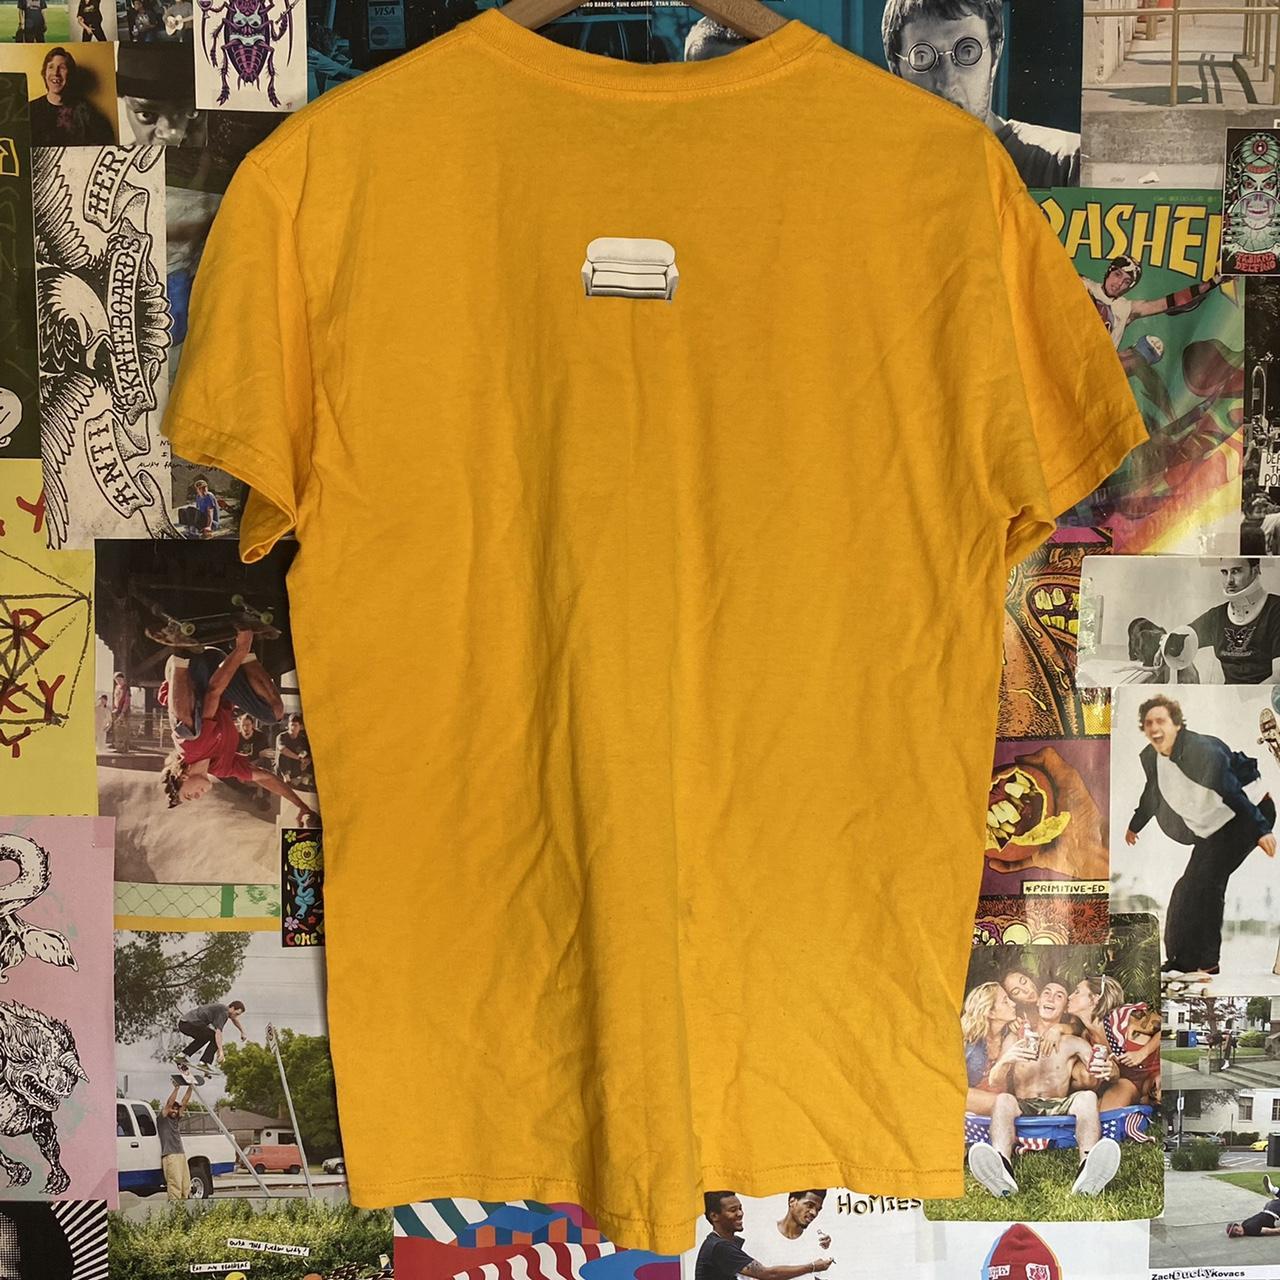 Product Image 3 - brockhampton iridescence yellow picture t-shirt

great